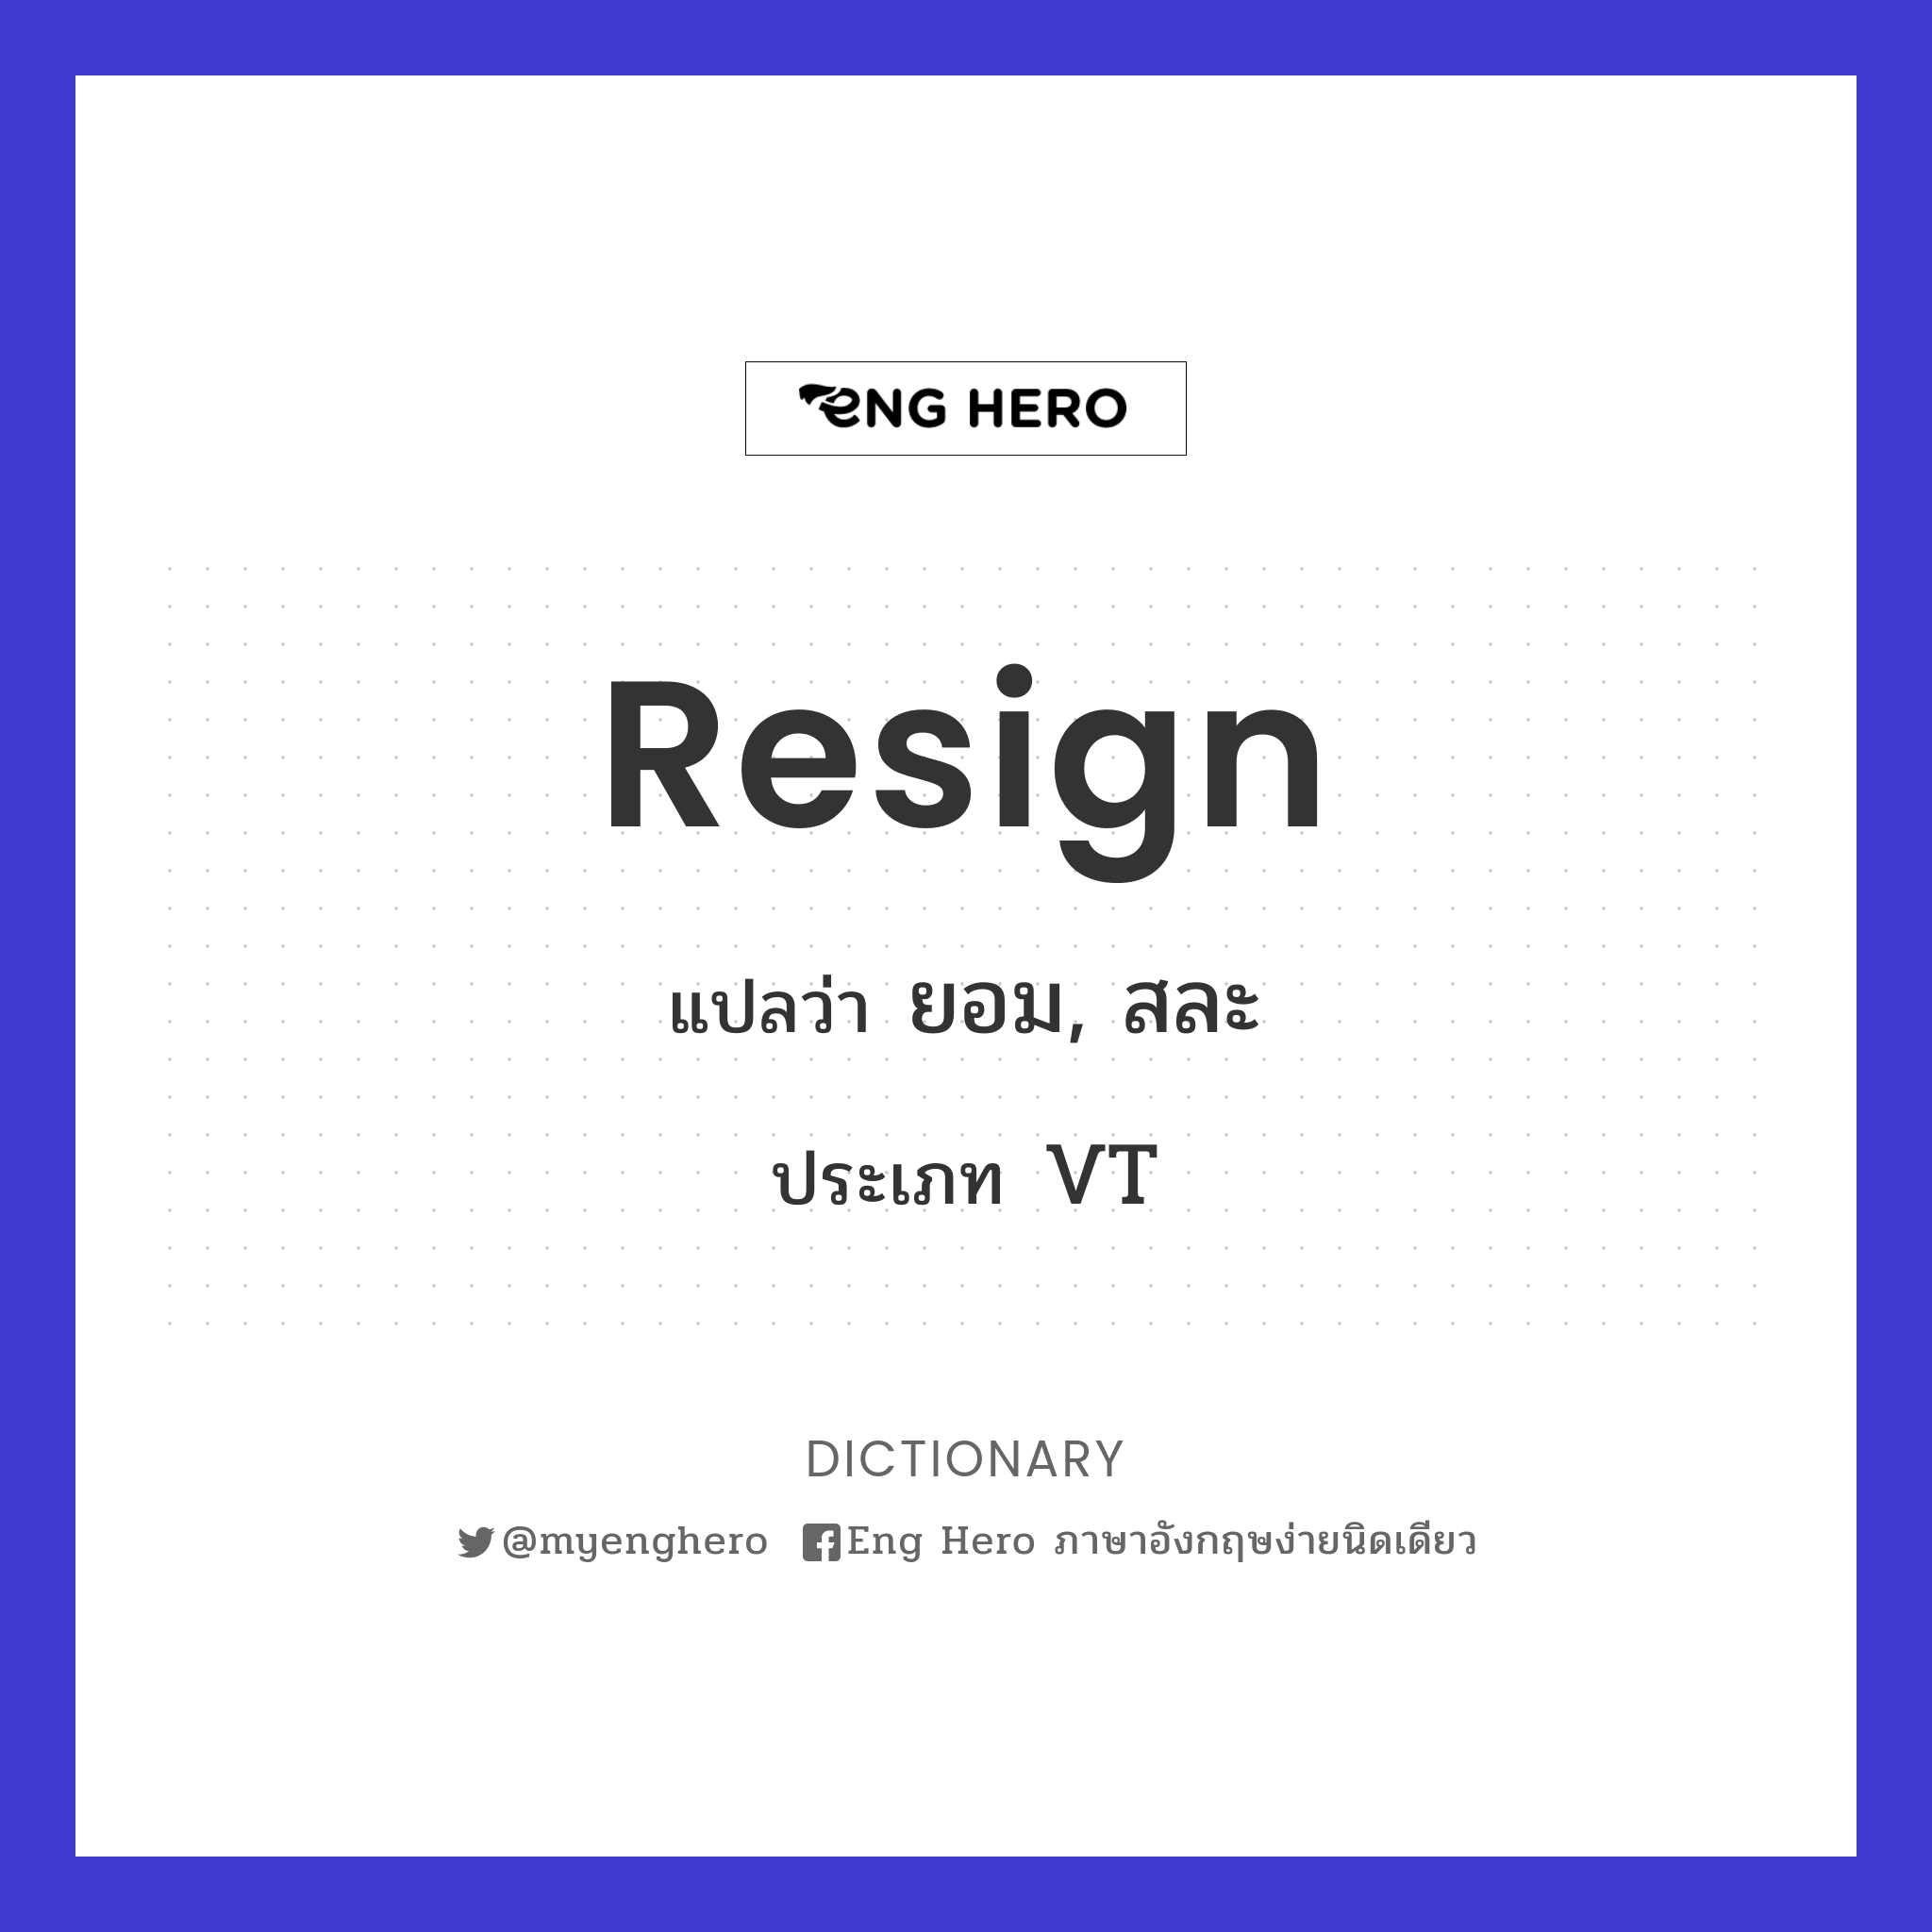 resign